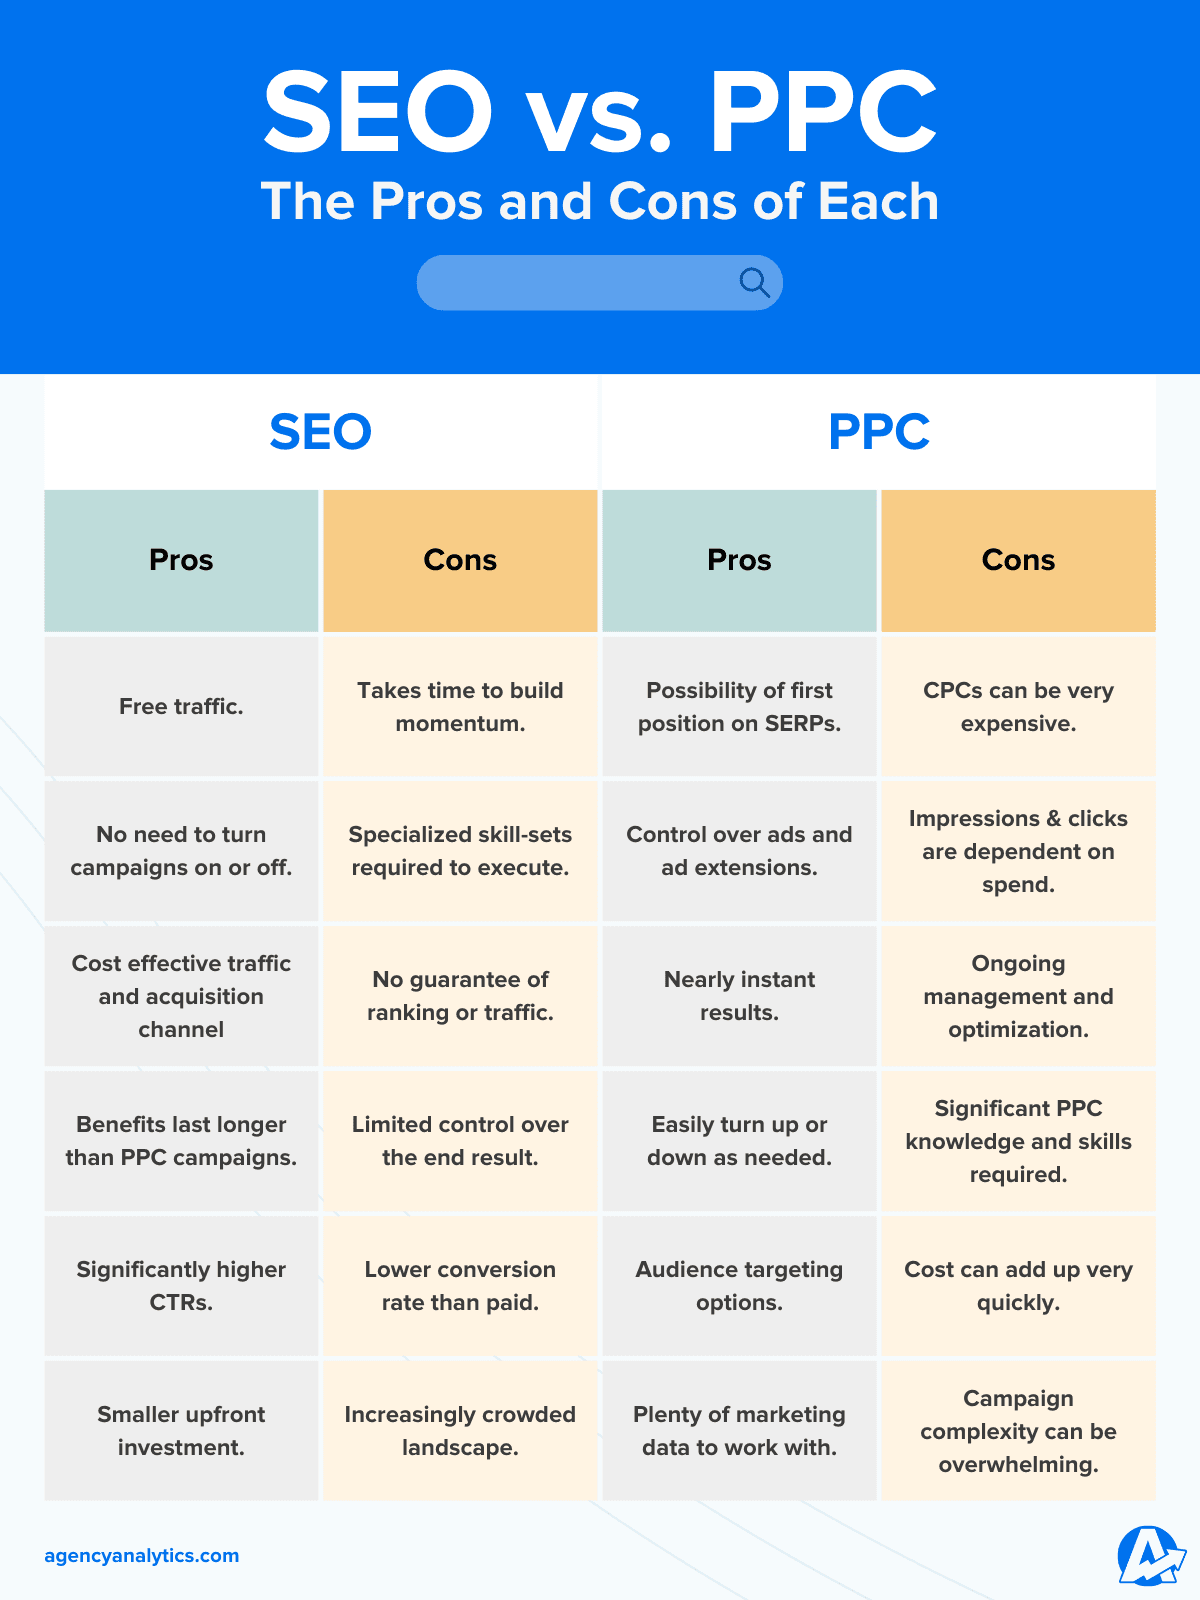 SEO vs PPC Pros and Cons